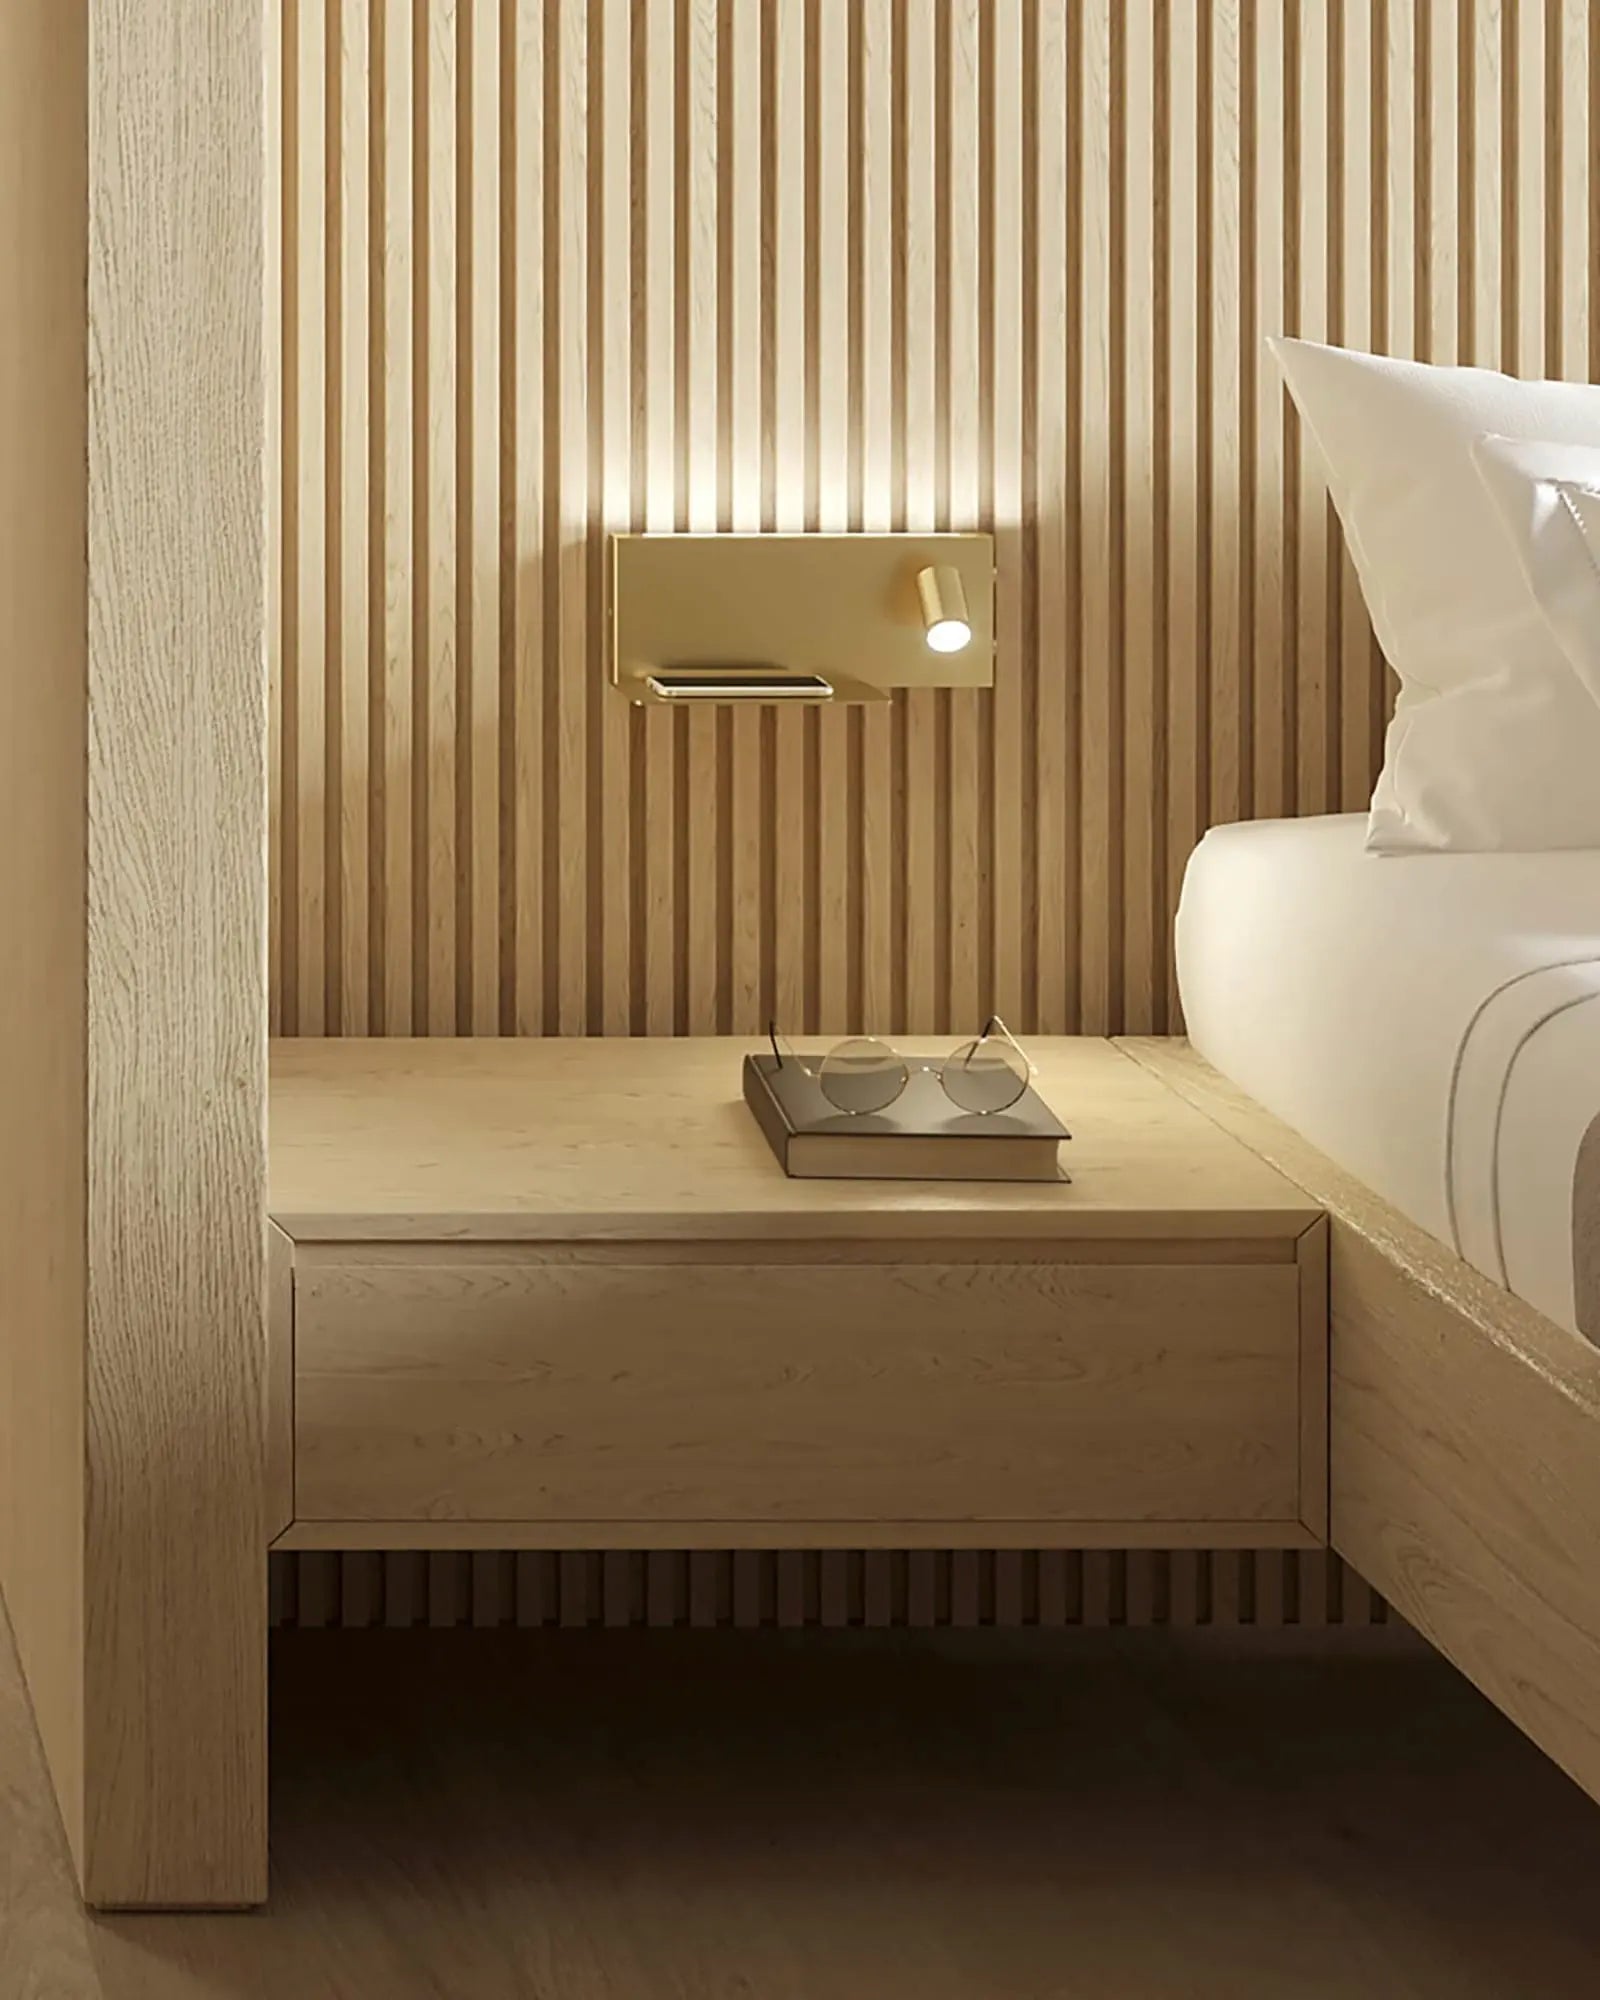 Jay wall light in a hotel room bedside